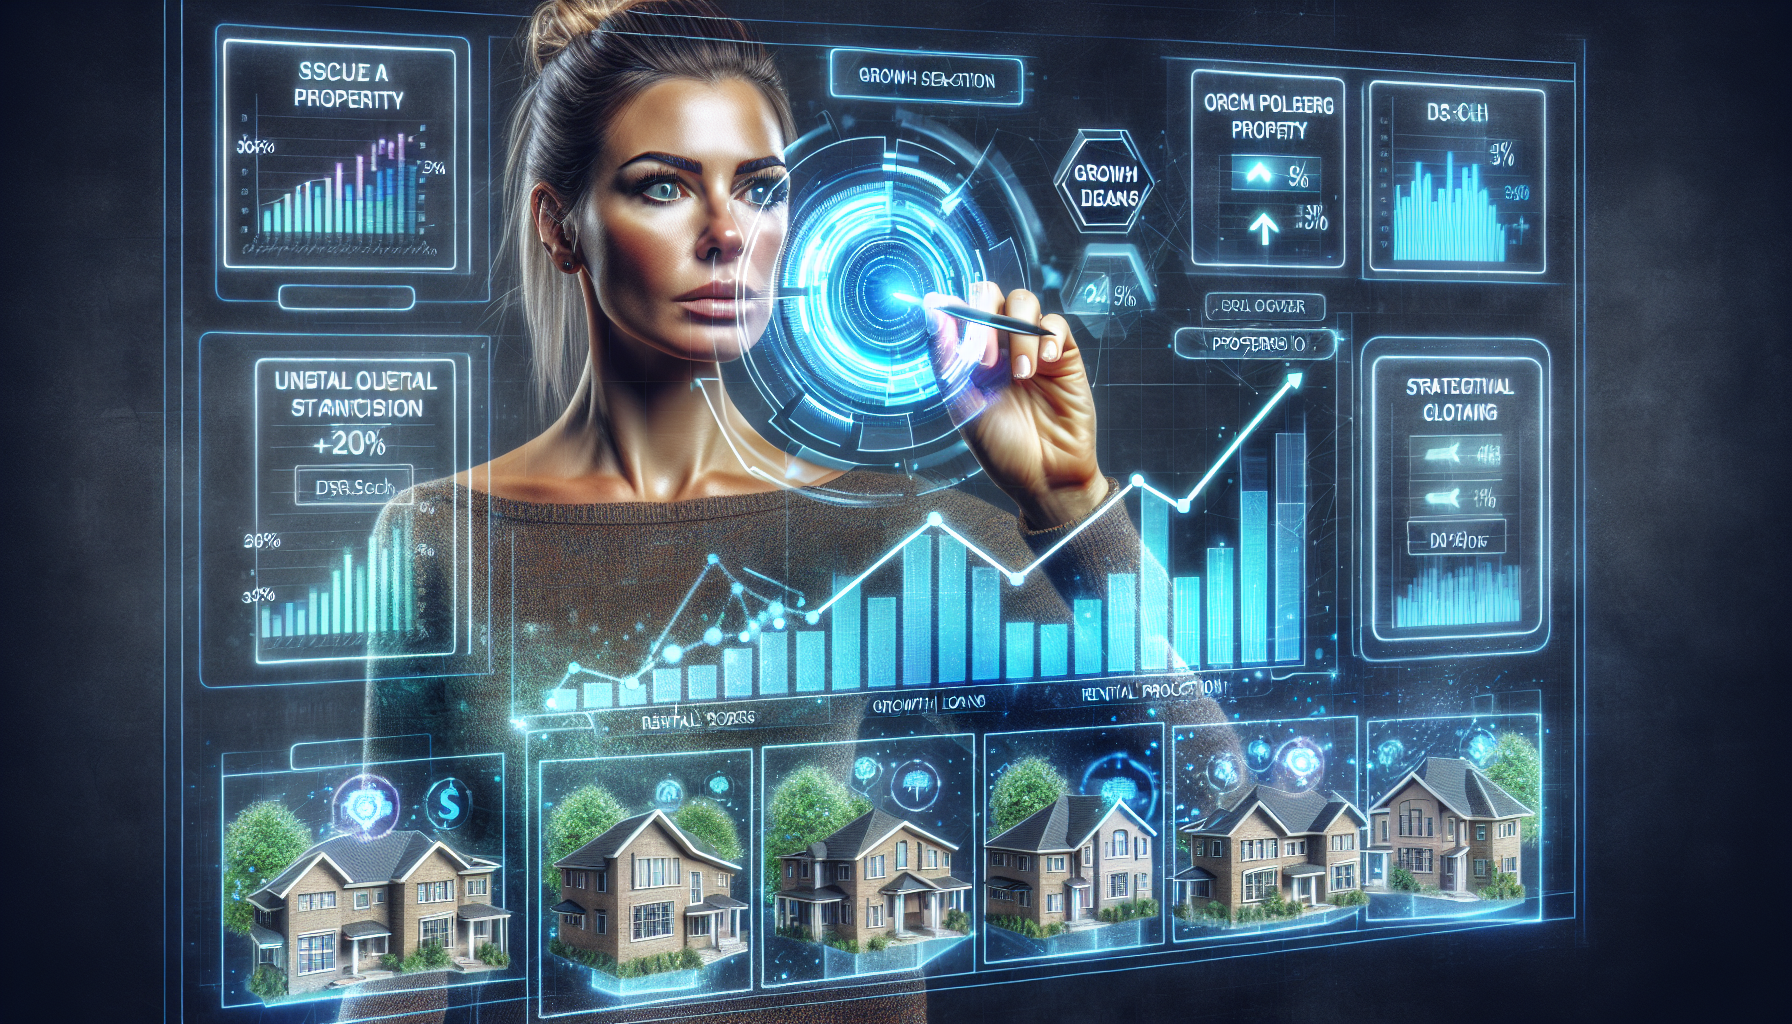 Illustration of real estate investor building a rental portfolio with DSCR loans